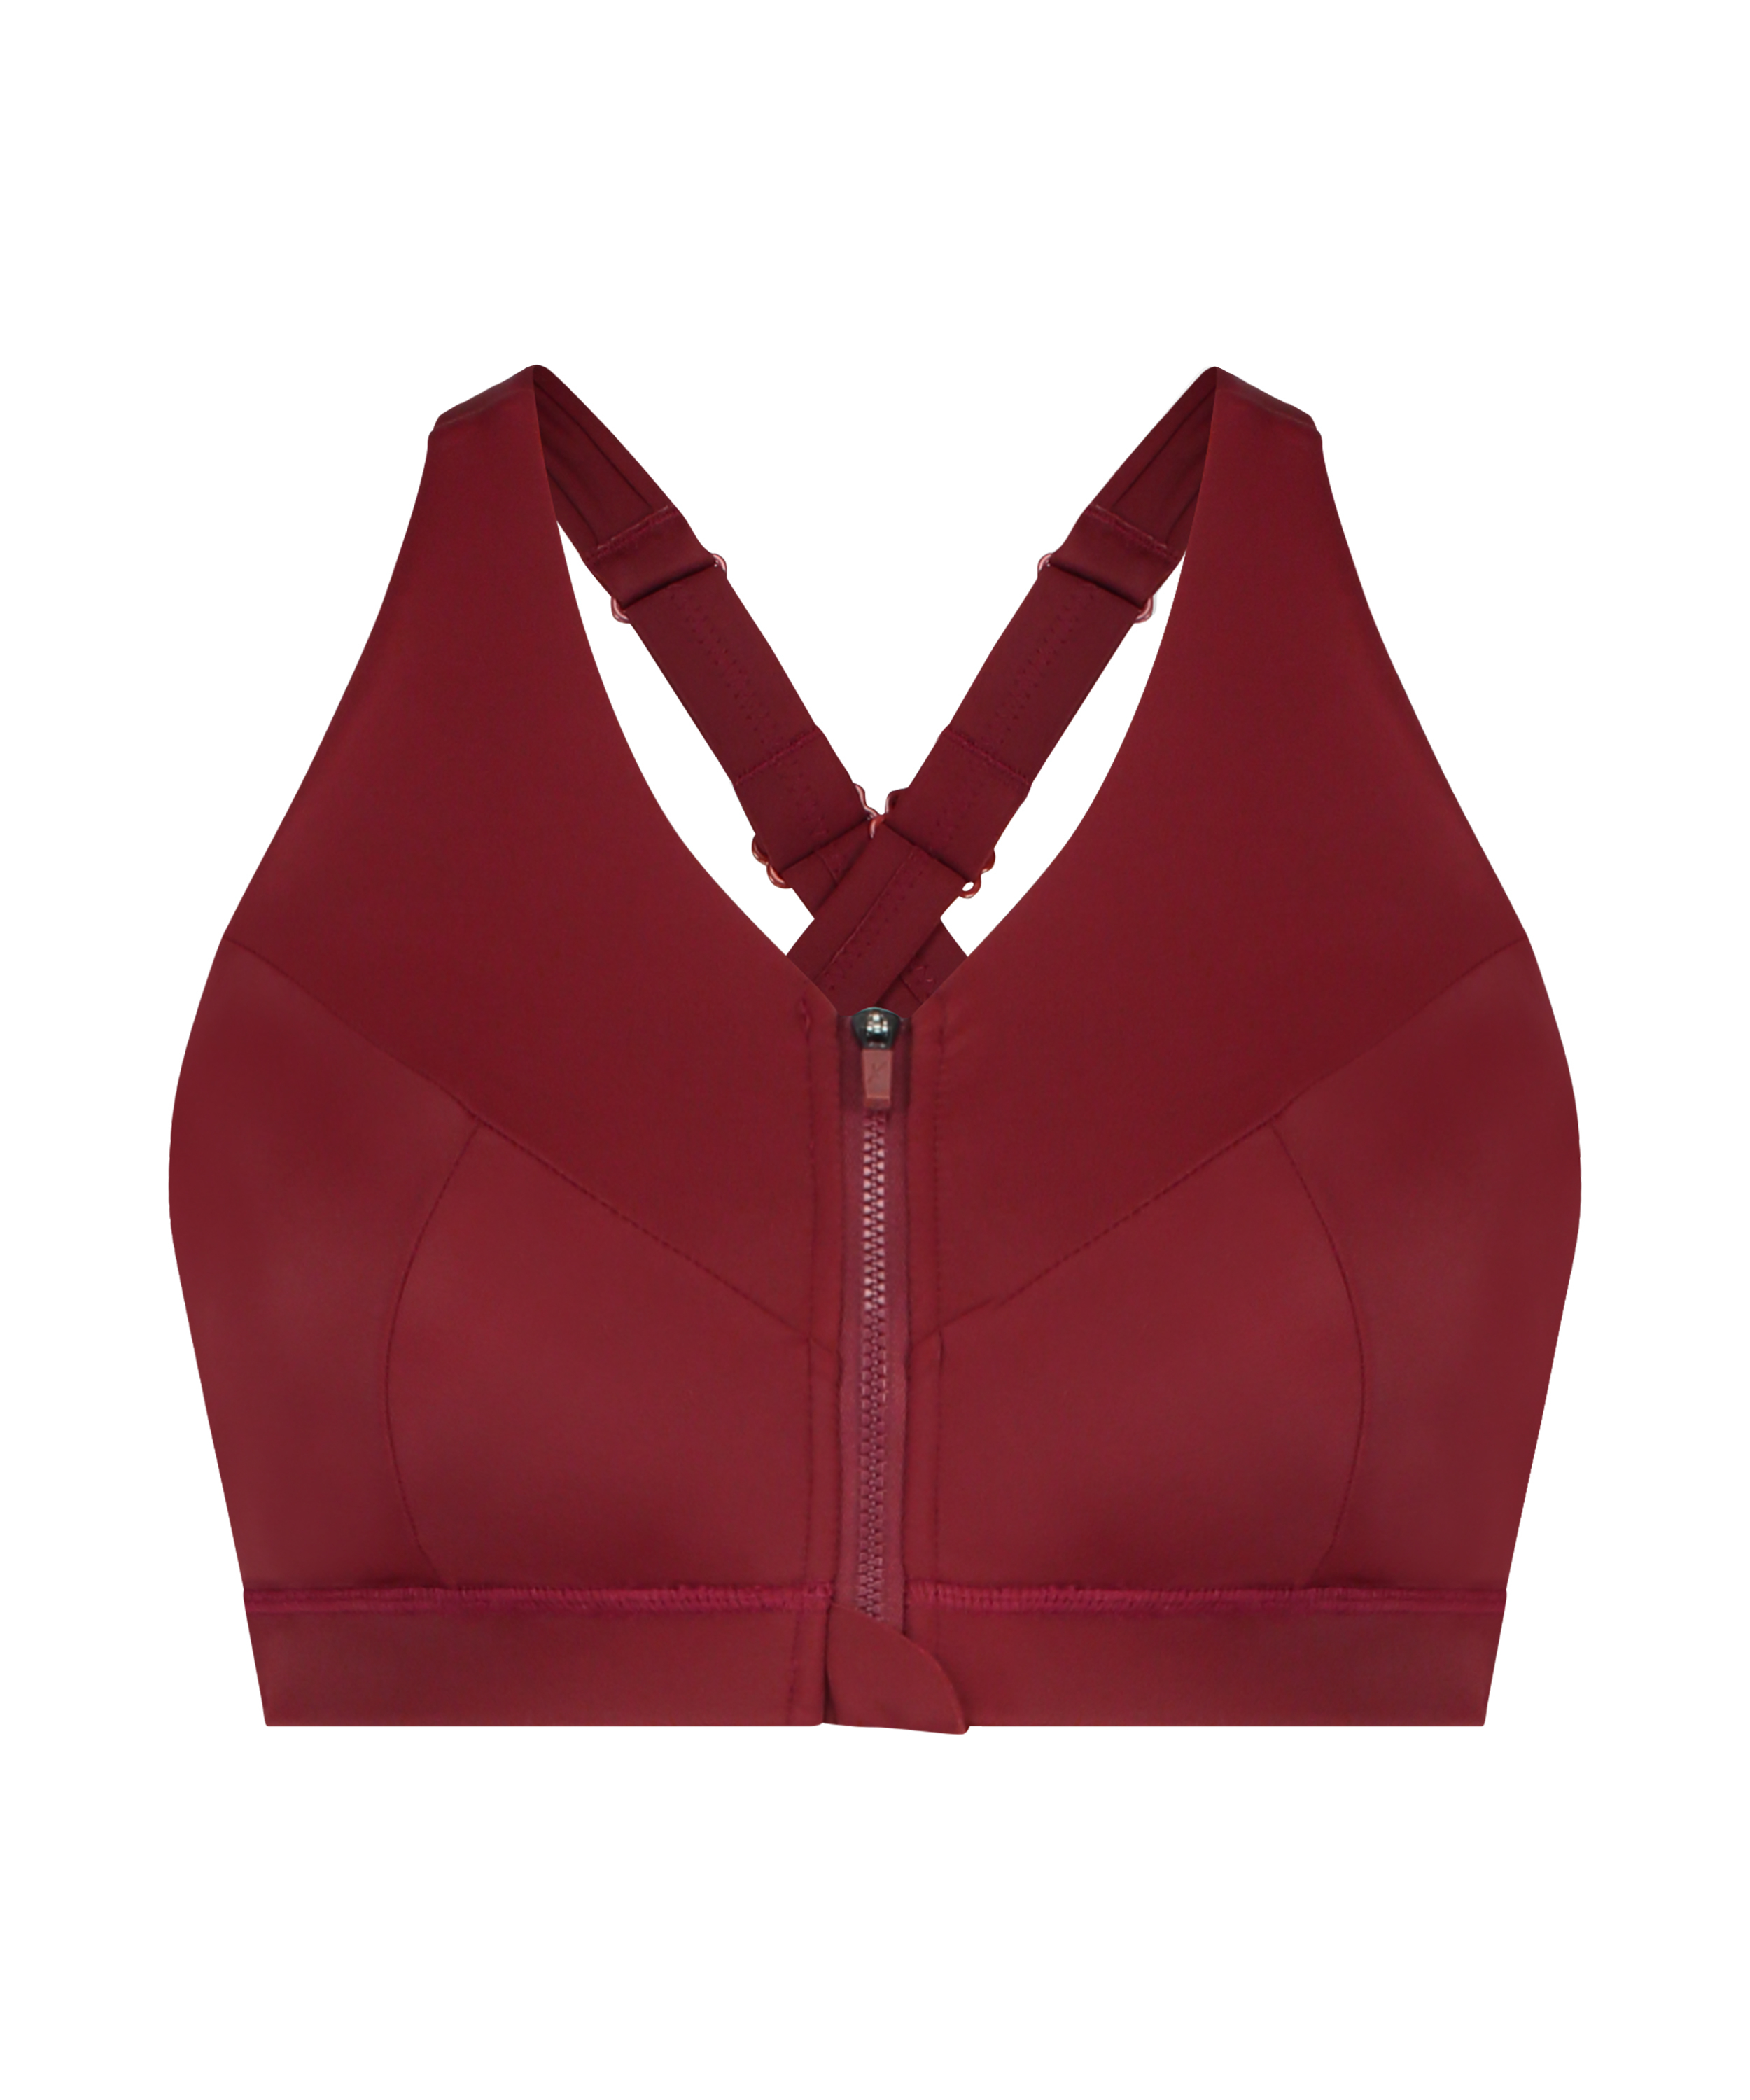 HKMX Sports bra The Pro Level 3, Red, main